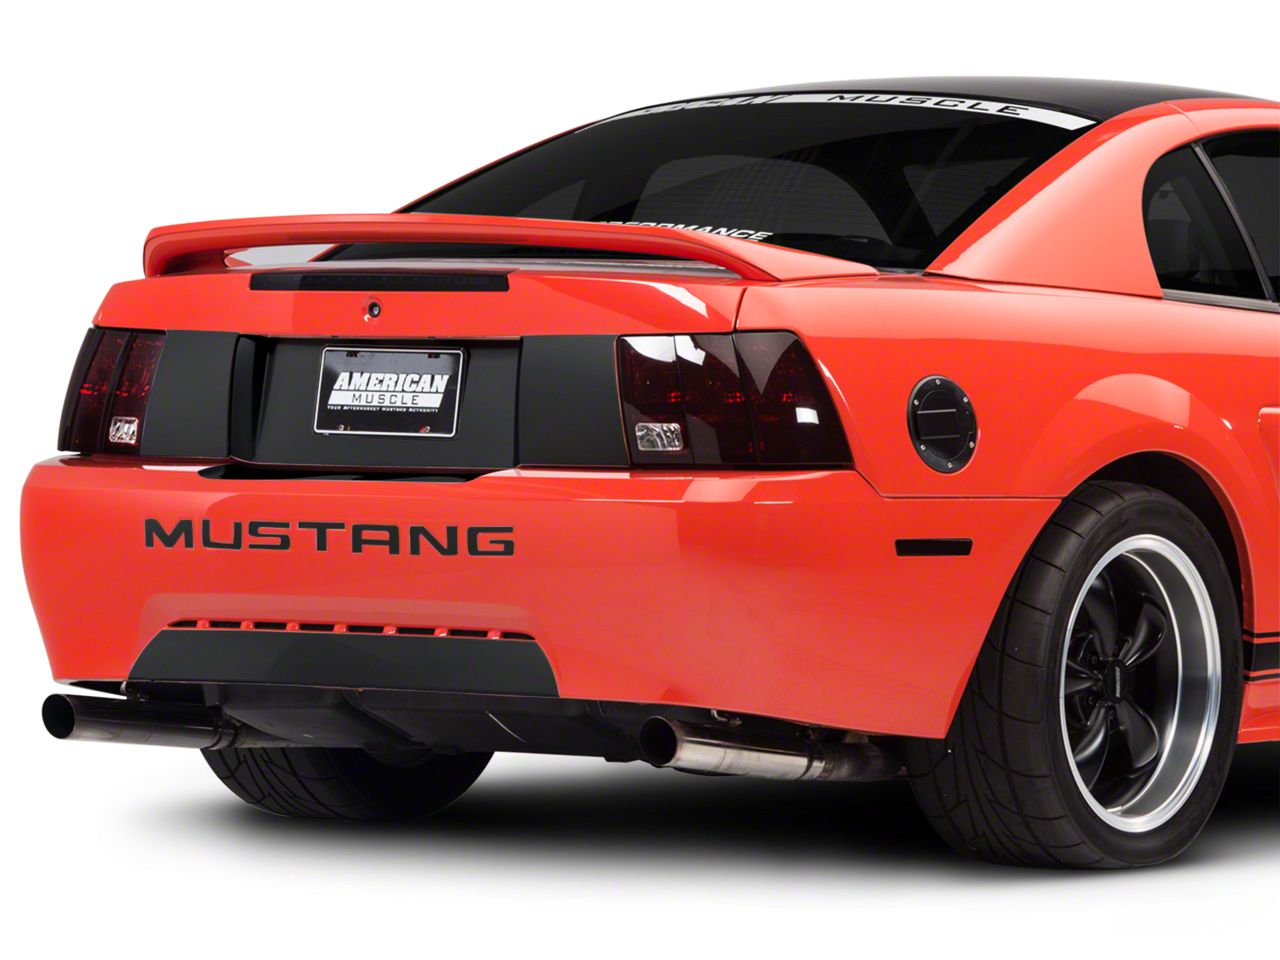 Mustang Decklid & Rear Bumper Decals 1999-2004